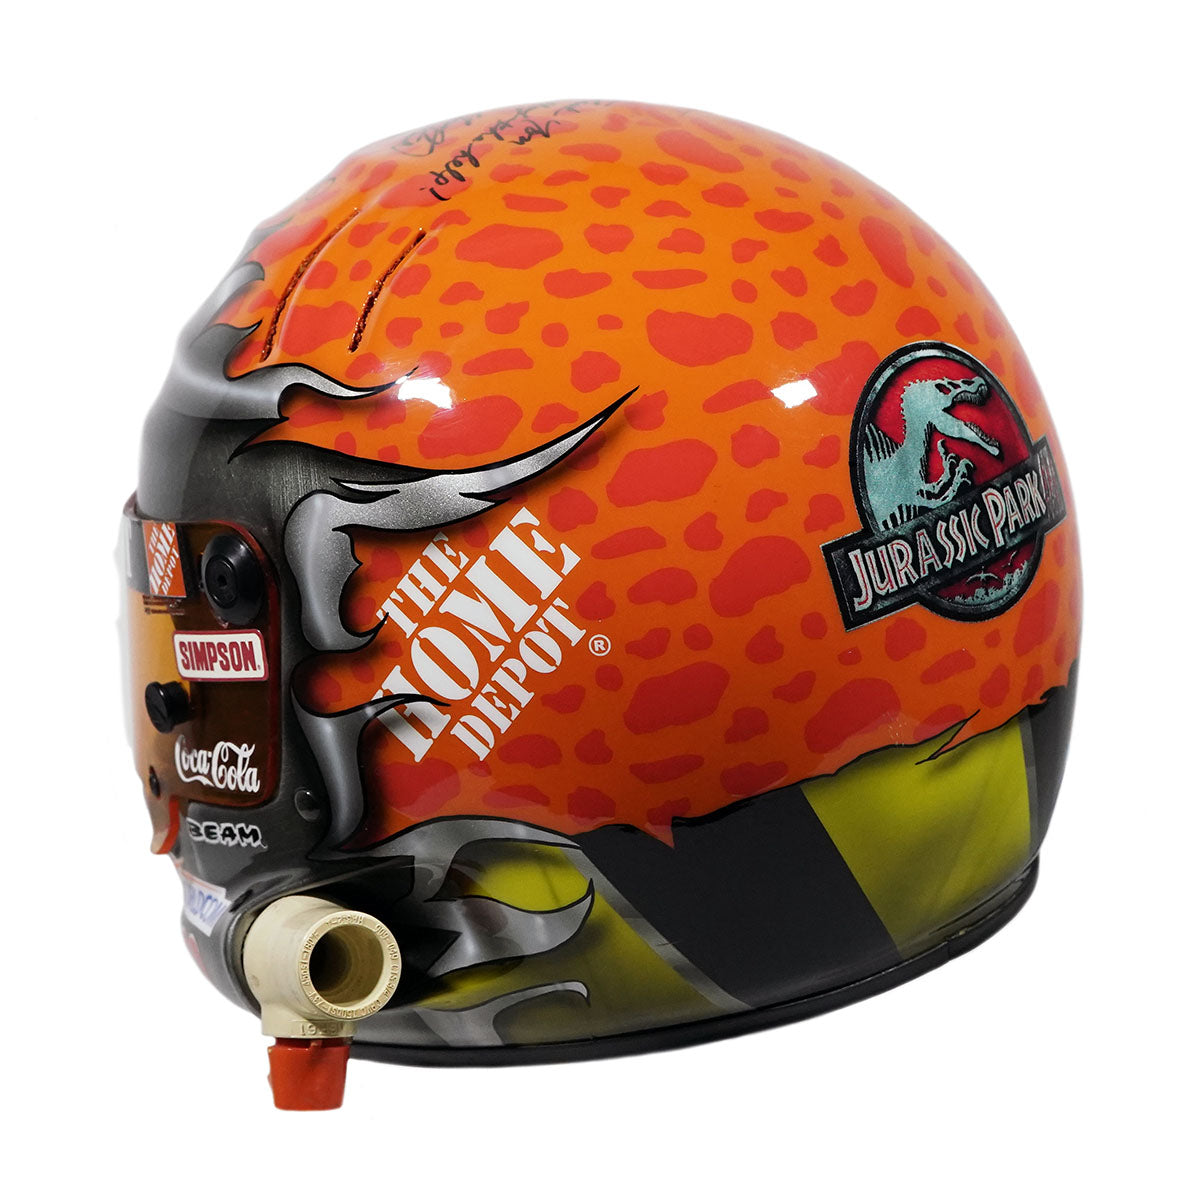 2010 Tony Stewart Signed Race Used NASCAR Helmet